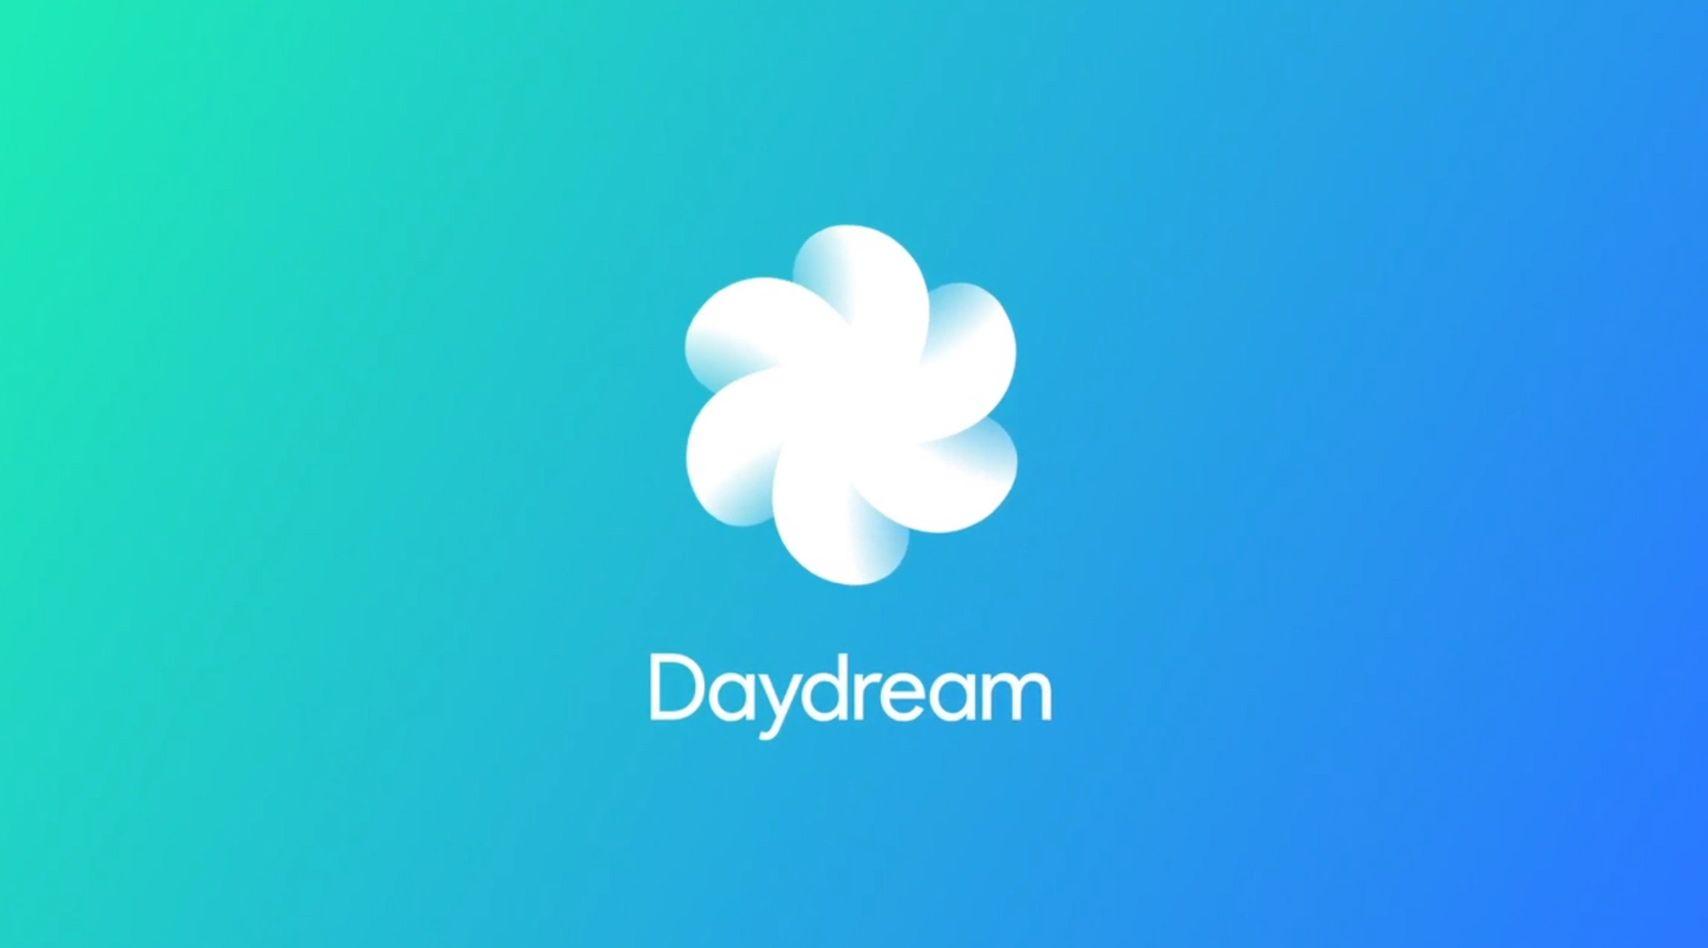 Daydream Logo - Speaking Volumes - Library - Google Design